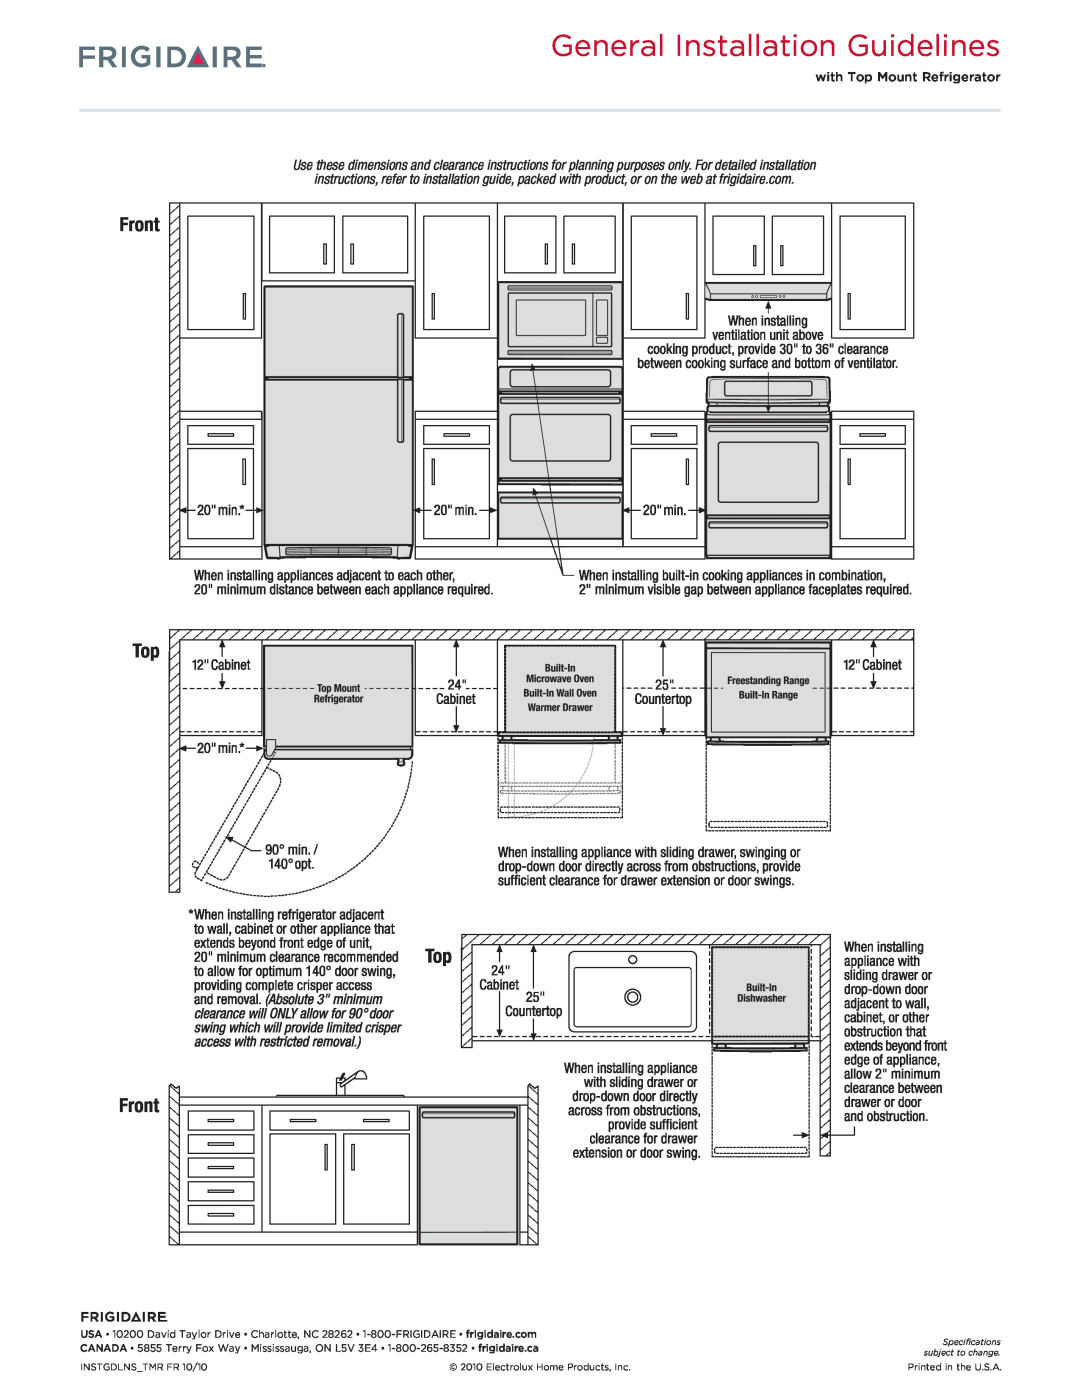 Frigidaire FPET2785KF General Installation Guidelines, Top Front, with Top Mount Refrigerator, INSTGDLNS TMR FR 10/10 